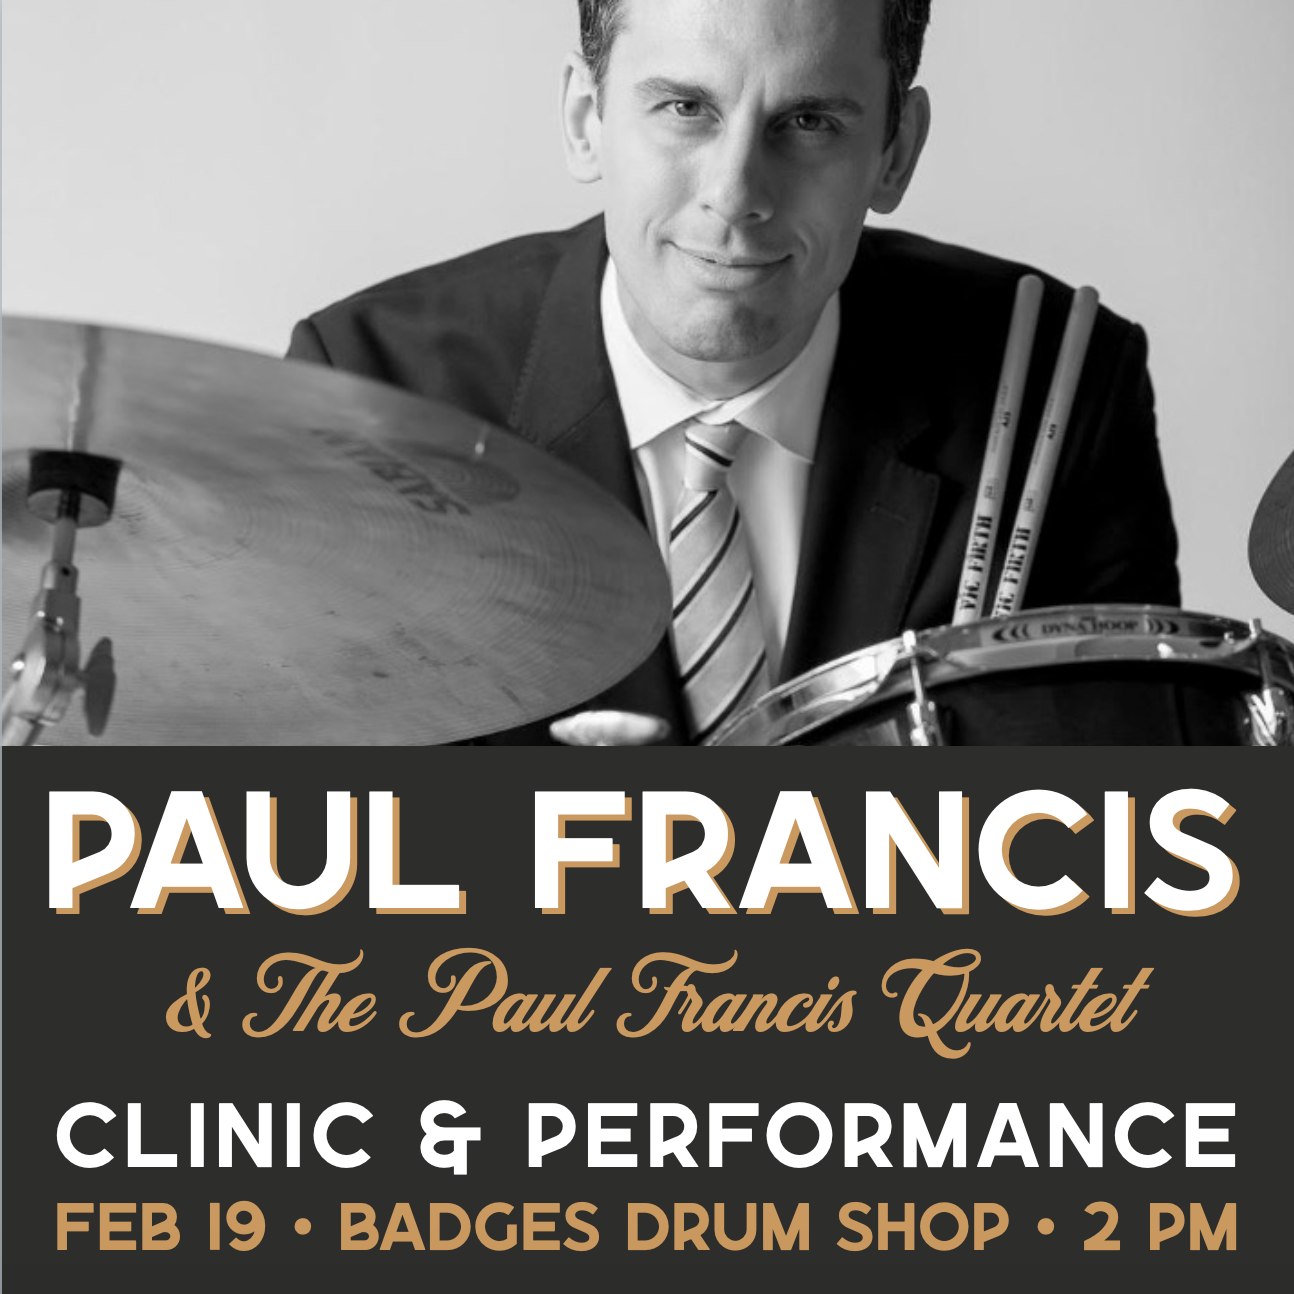 PAUL FRANCIS Drum Clinic & Performance at Badges Drum Shop